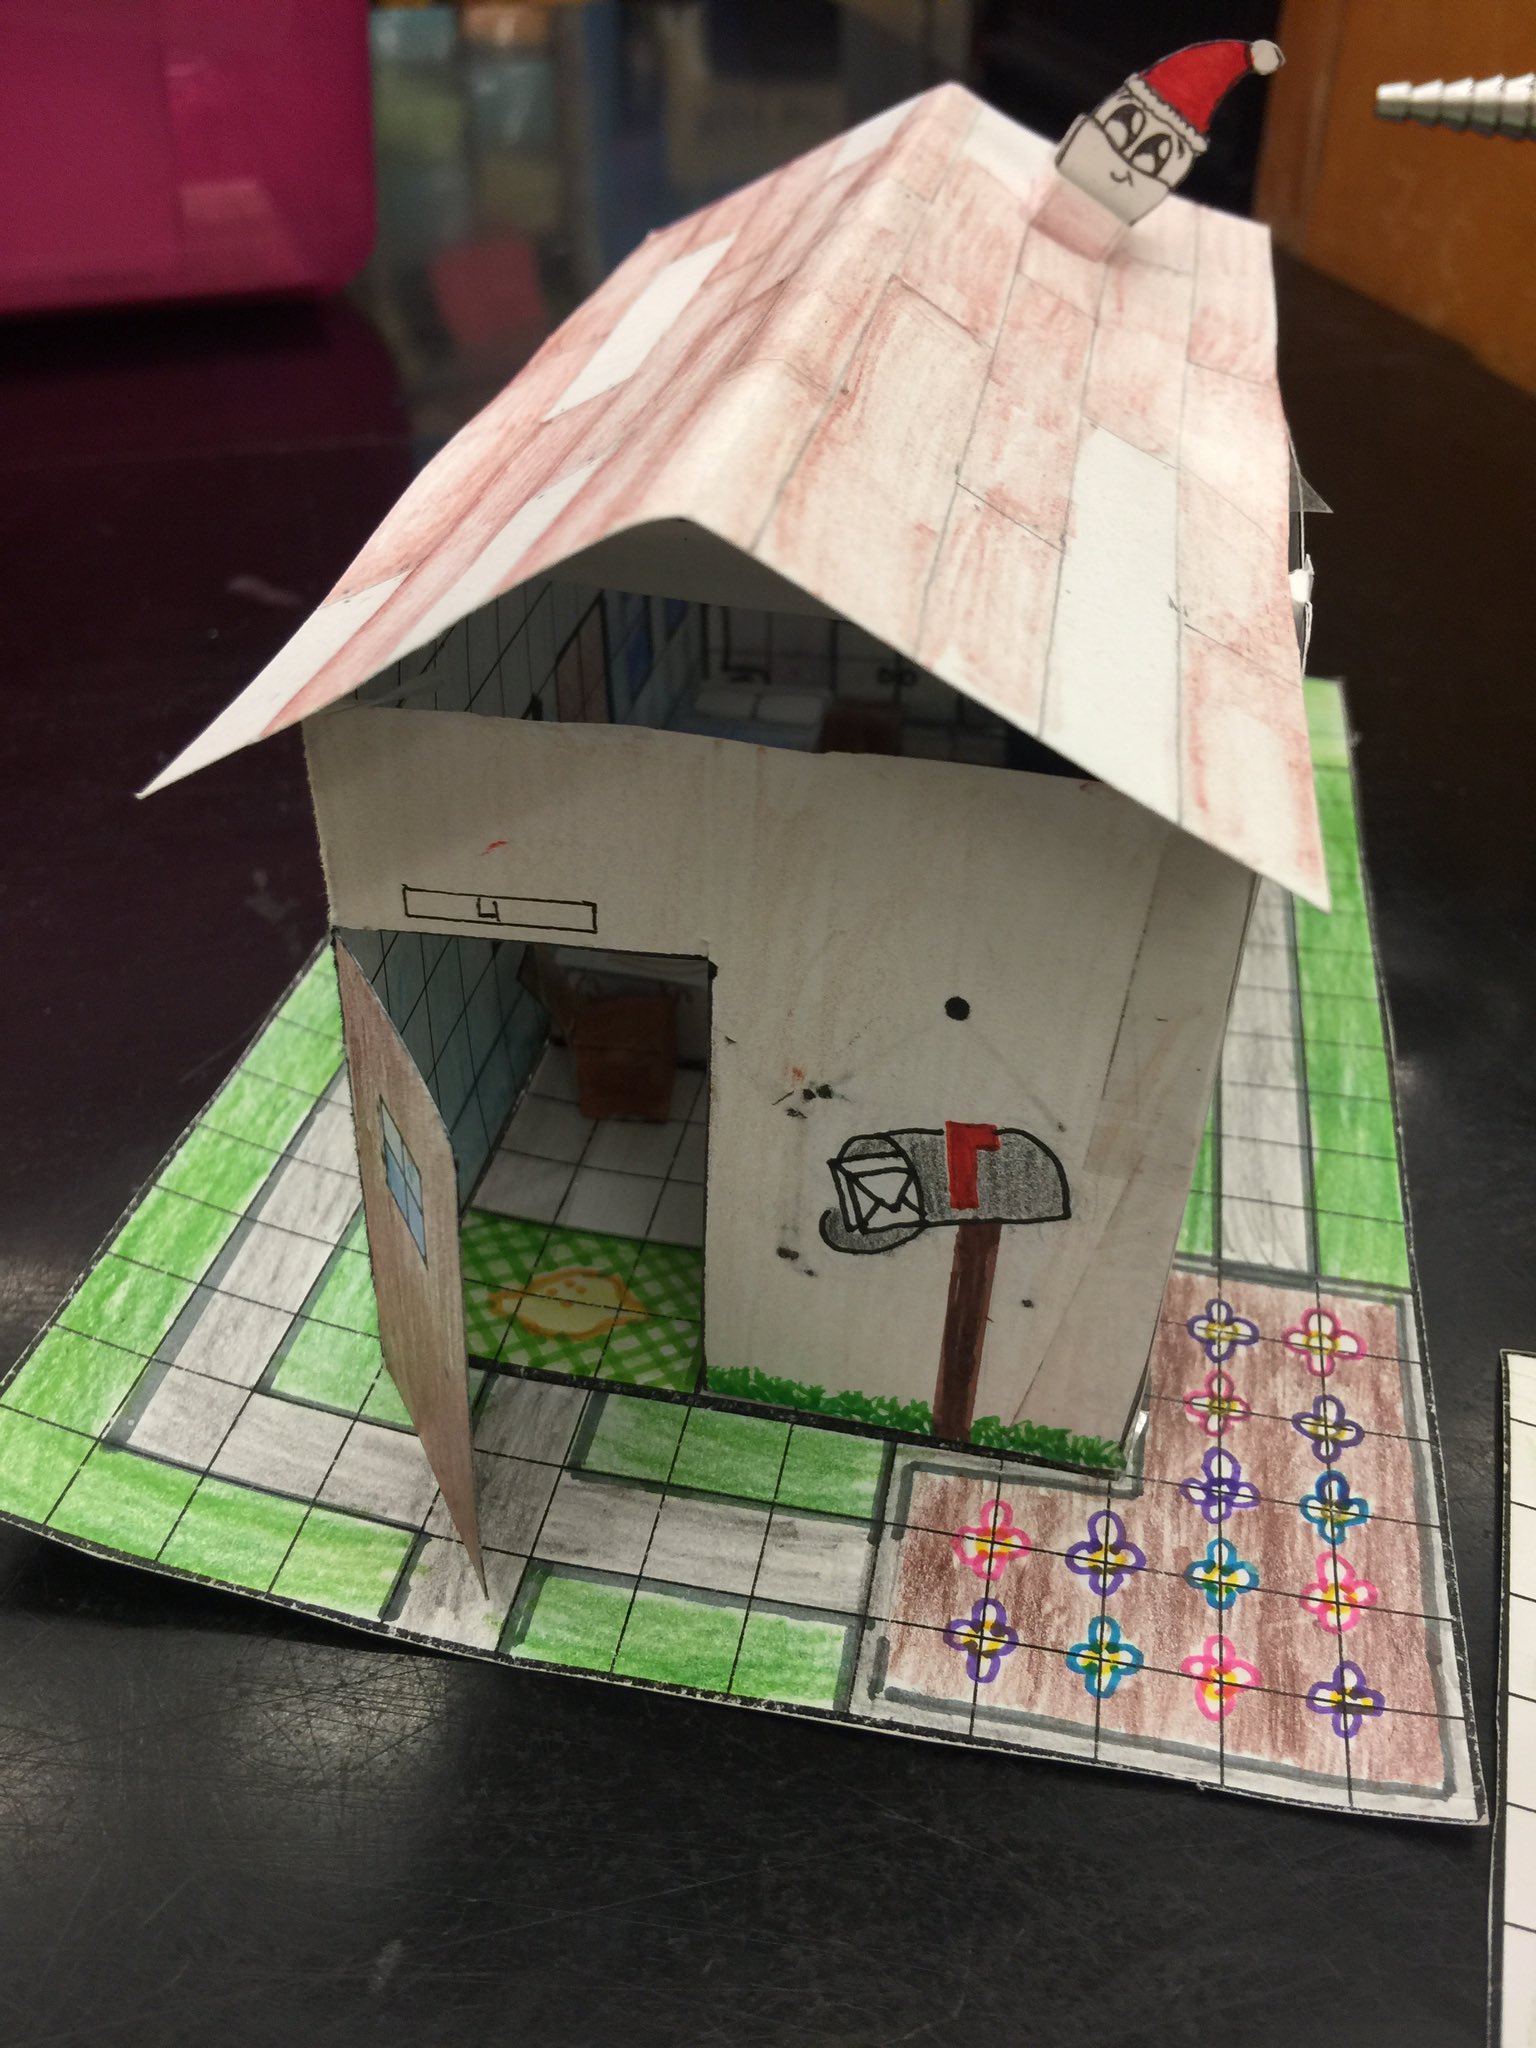 Lisa Tatum on Twitter: "Build a Tiny House Project - Grade 7 Math